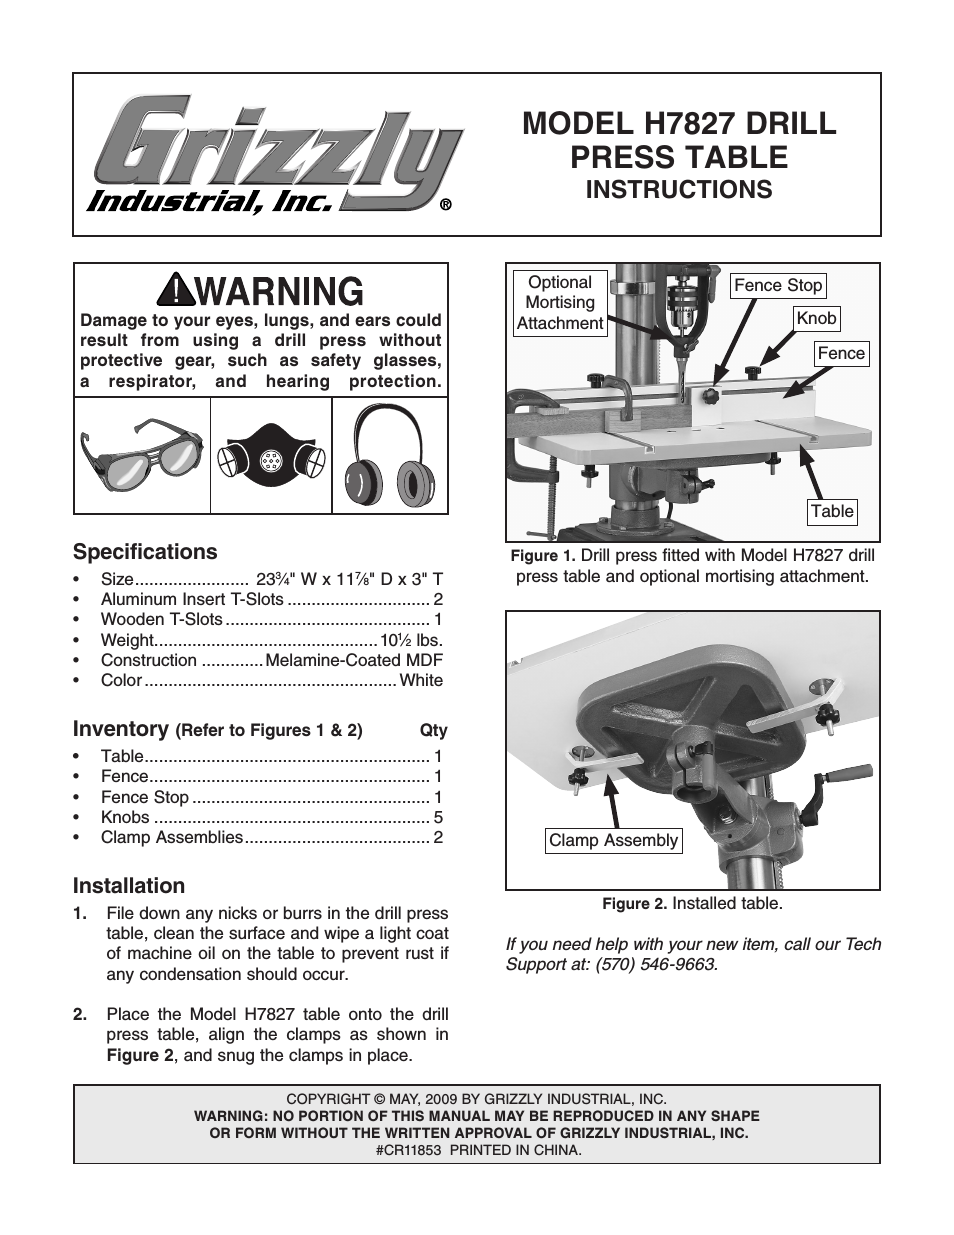 Press Table H7827